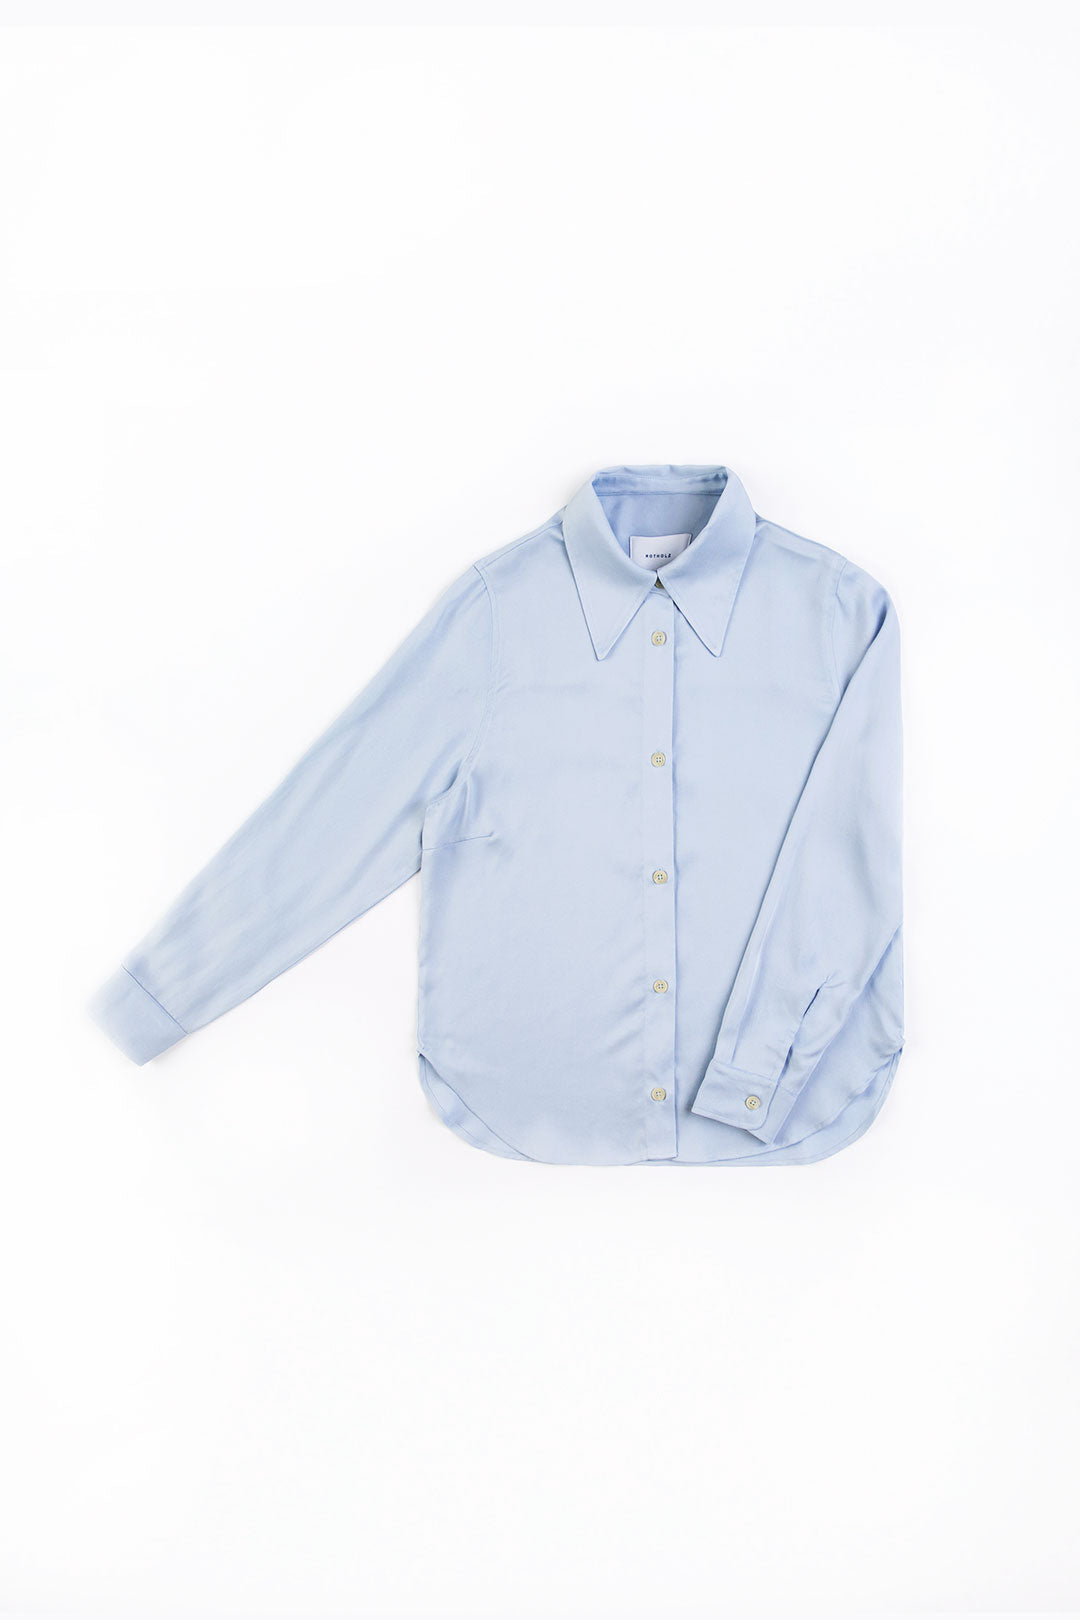 Light blue shirt made from 100% Tencel Lyocell from Rotholz